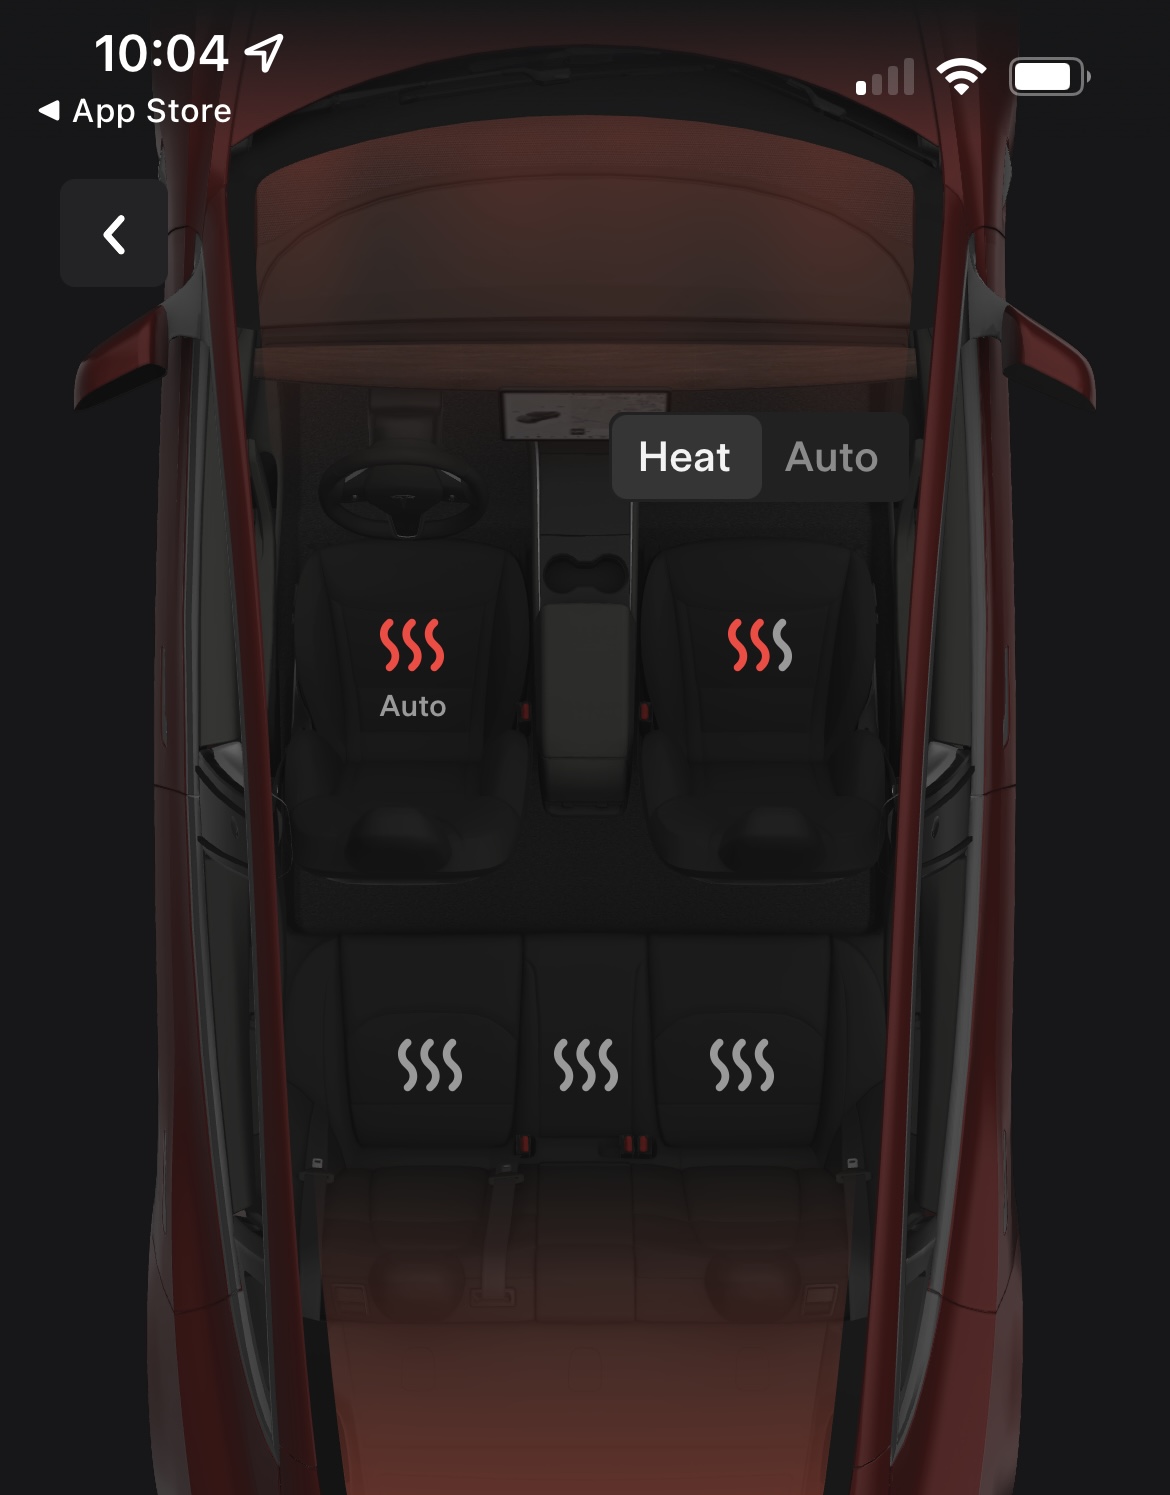 Tesla Auto Seat Temperature feature in update 4.7